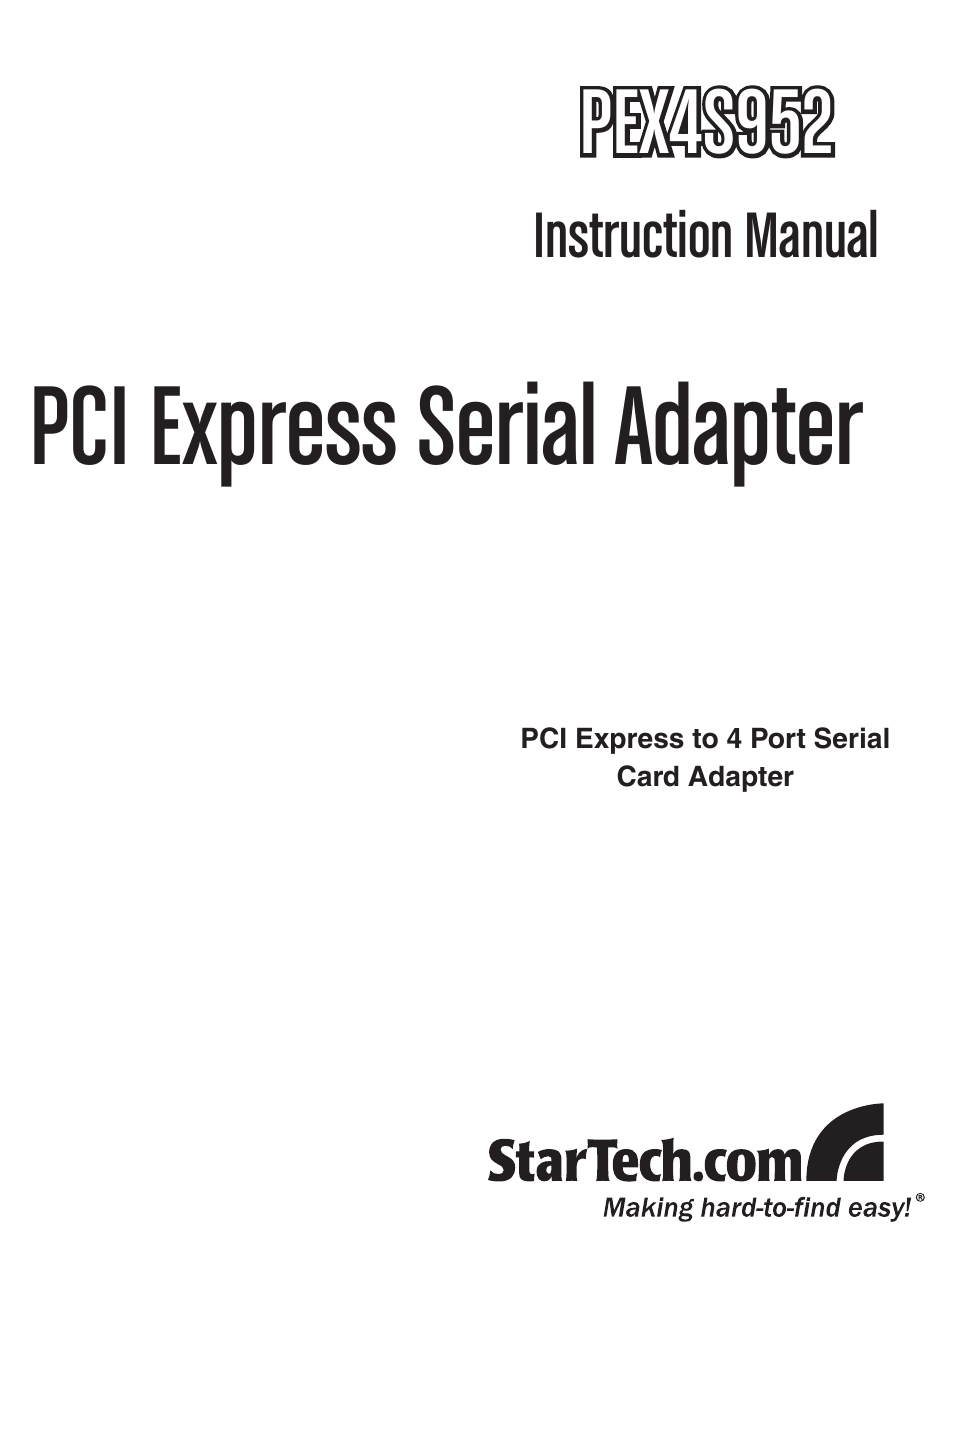 PCI EXPRESS SERIAL ADAPTER PEX4S952